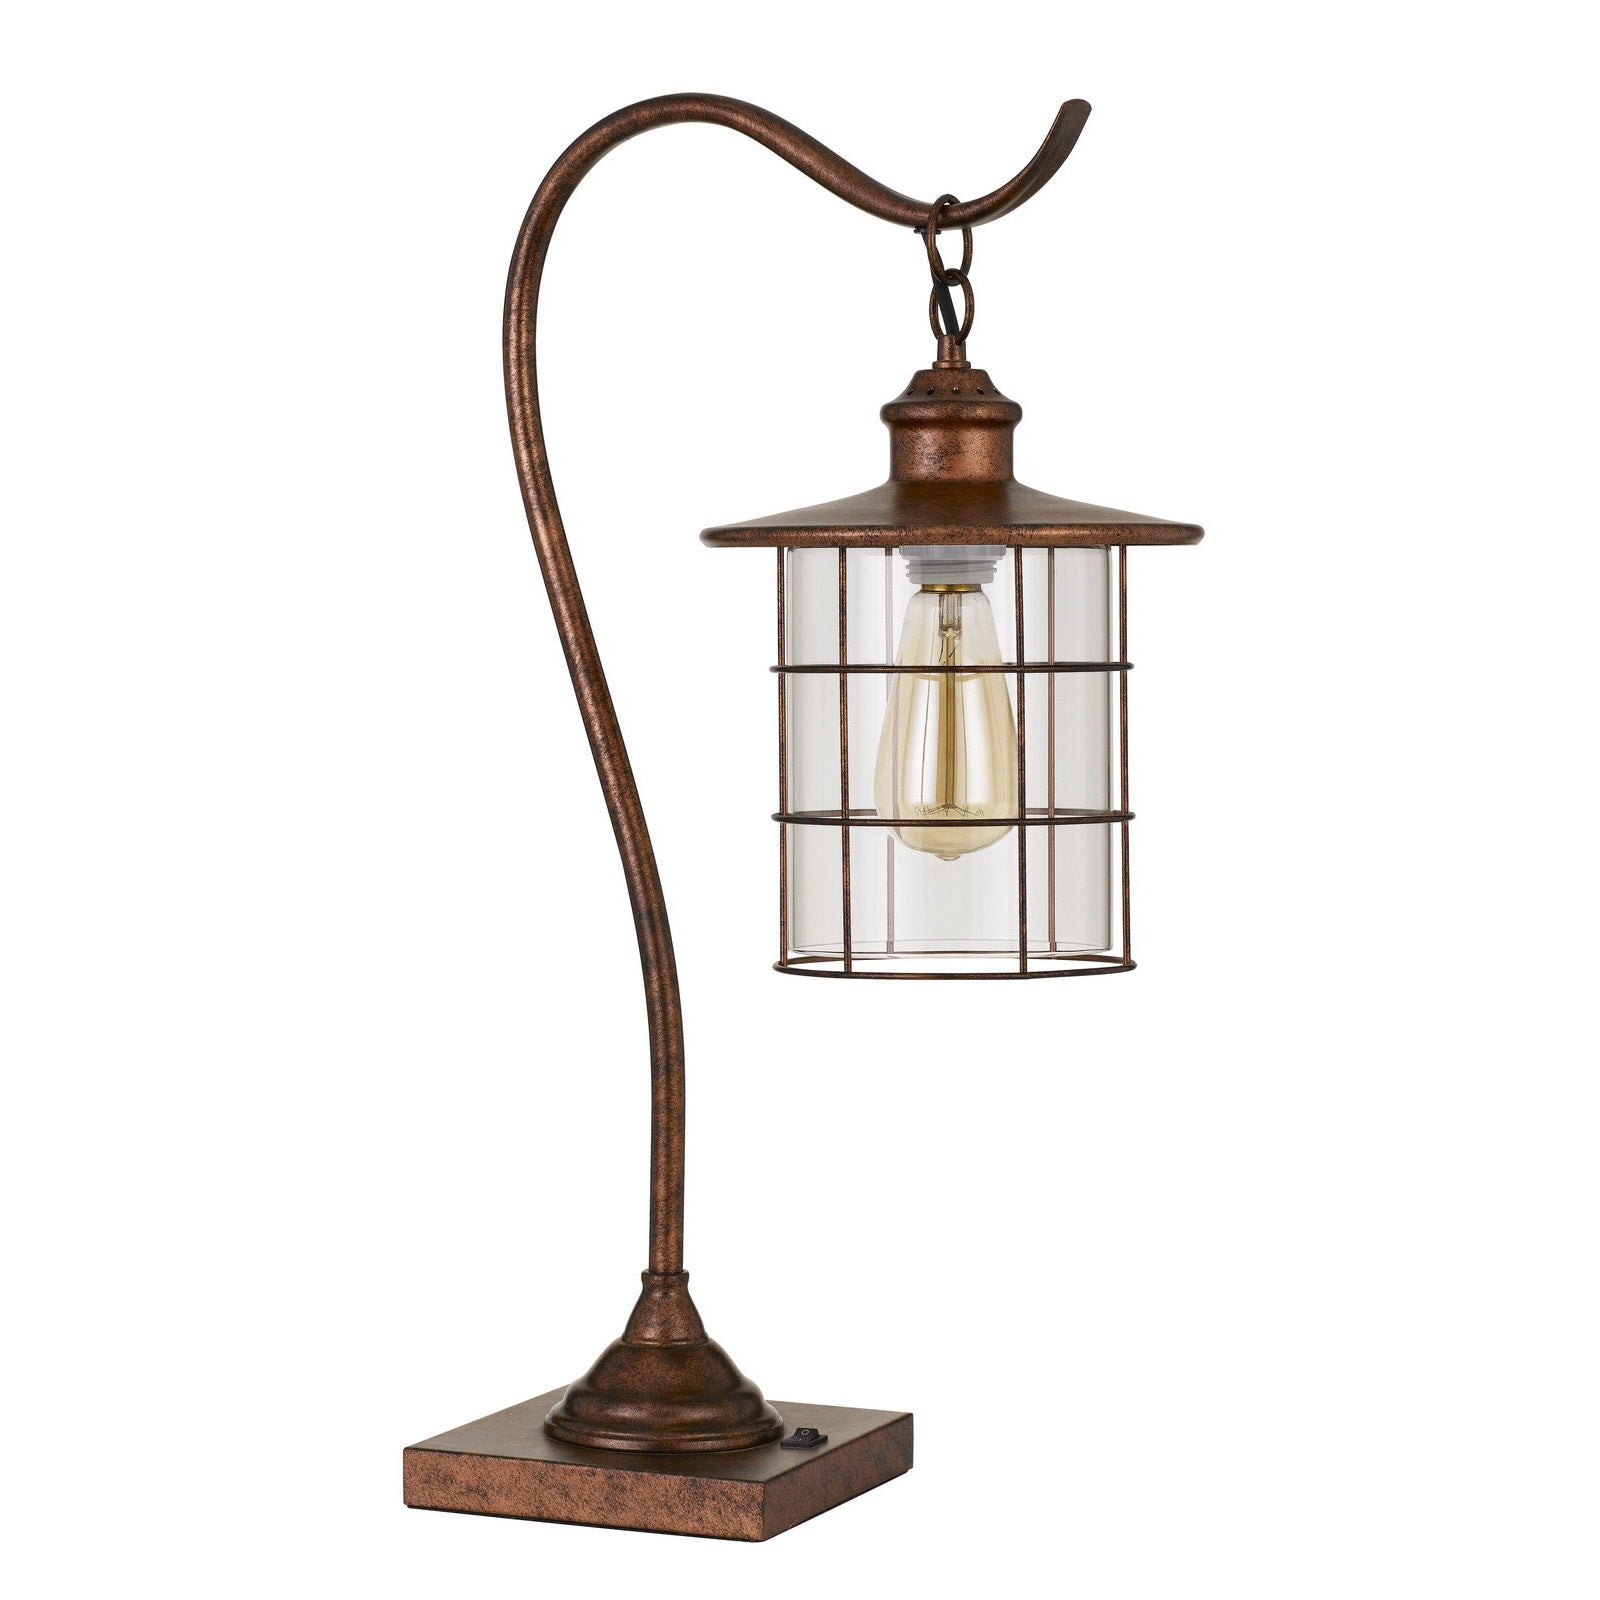 Lantern Style Desk Lamp in Rustic Finish